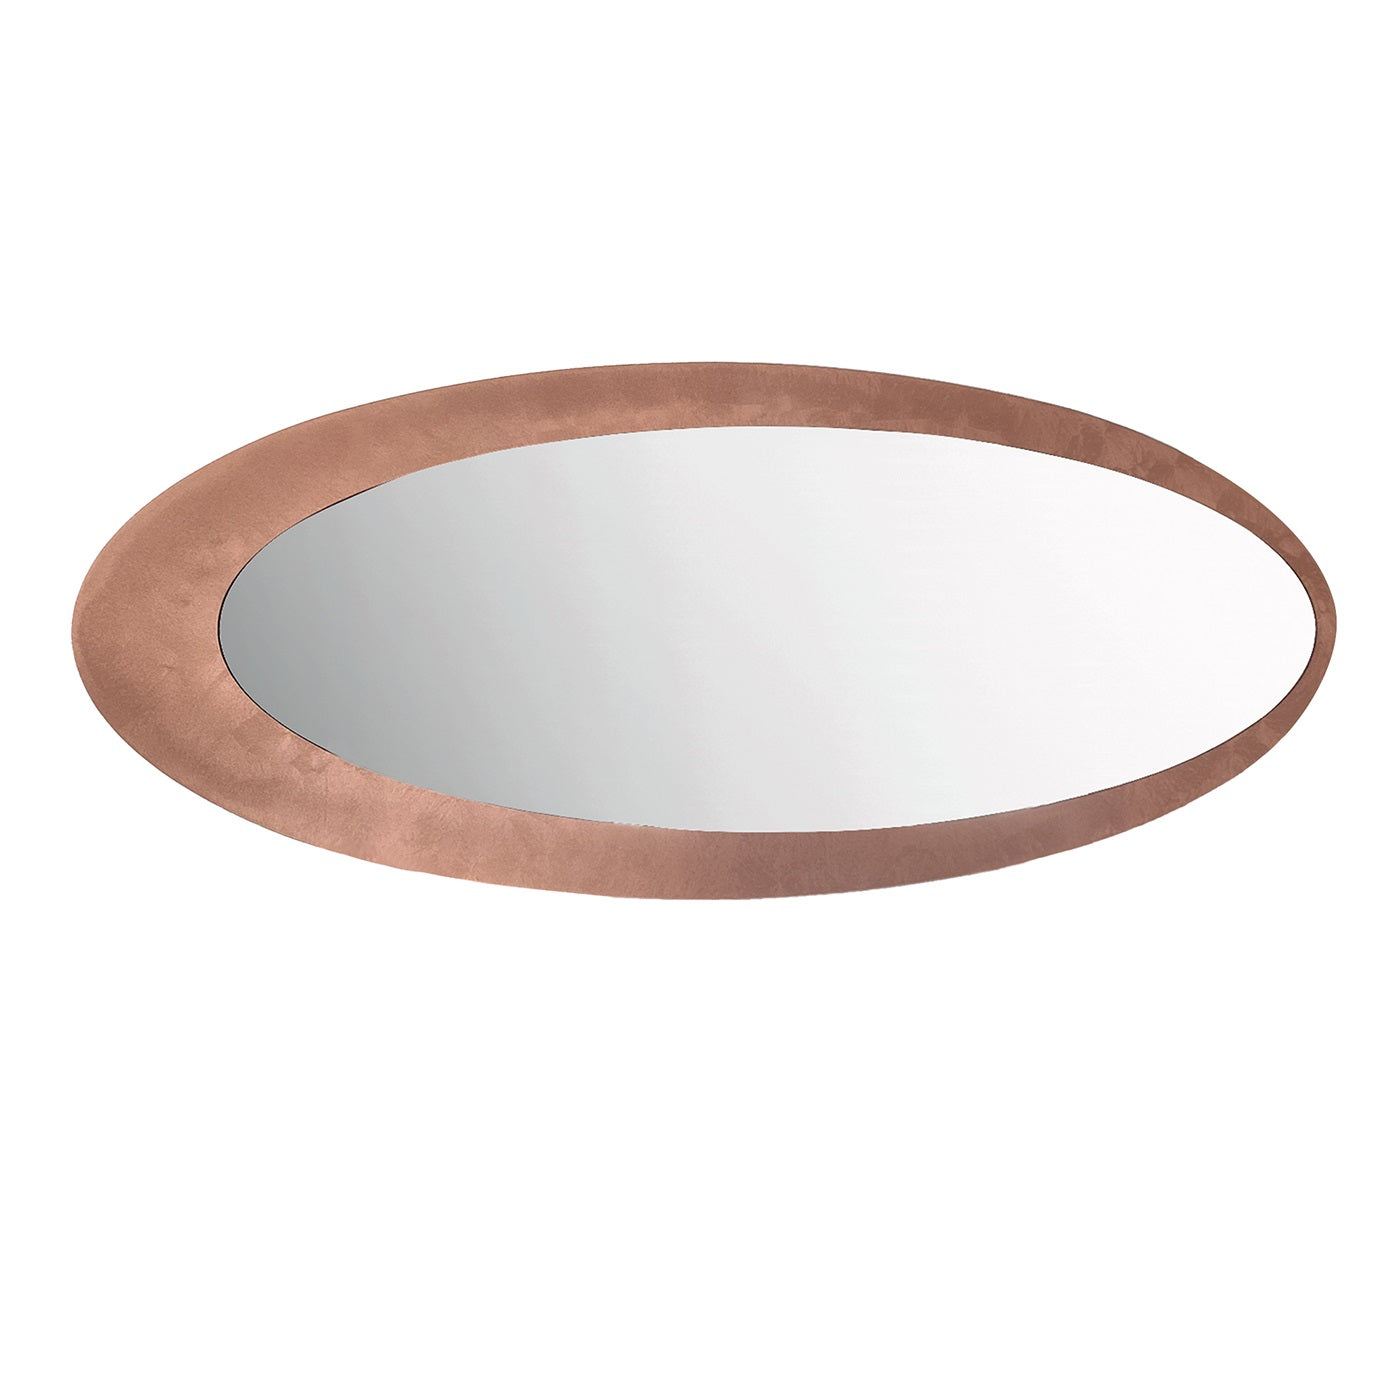 Orbit Oval Copper Mirror by Fabio Casali - Main view